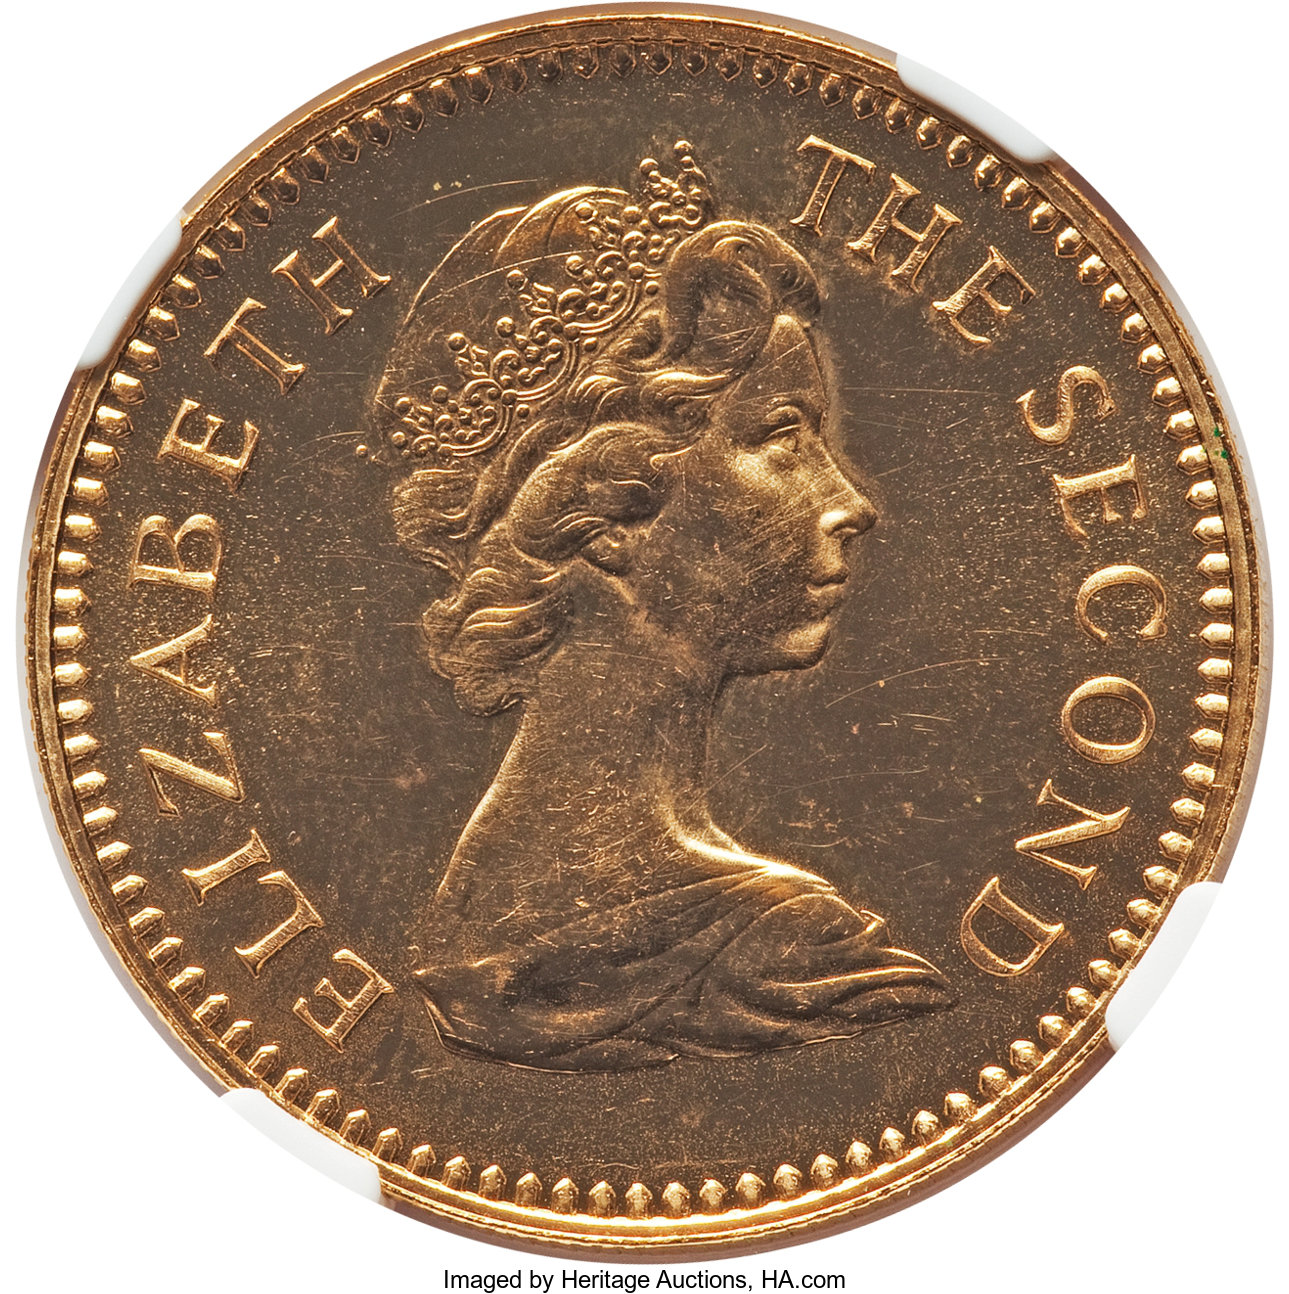 5 pounds - Elizabeth II